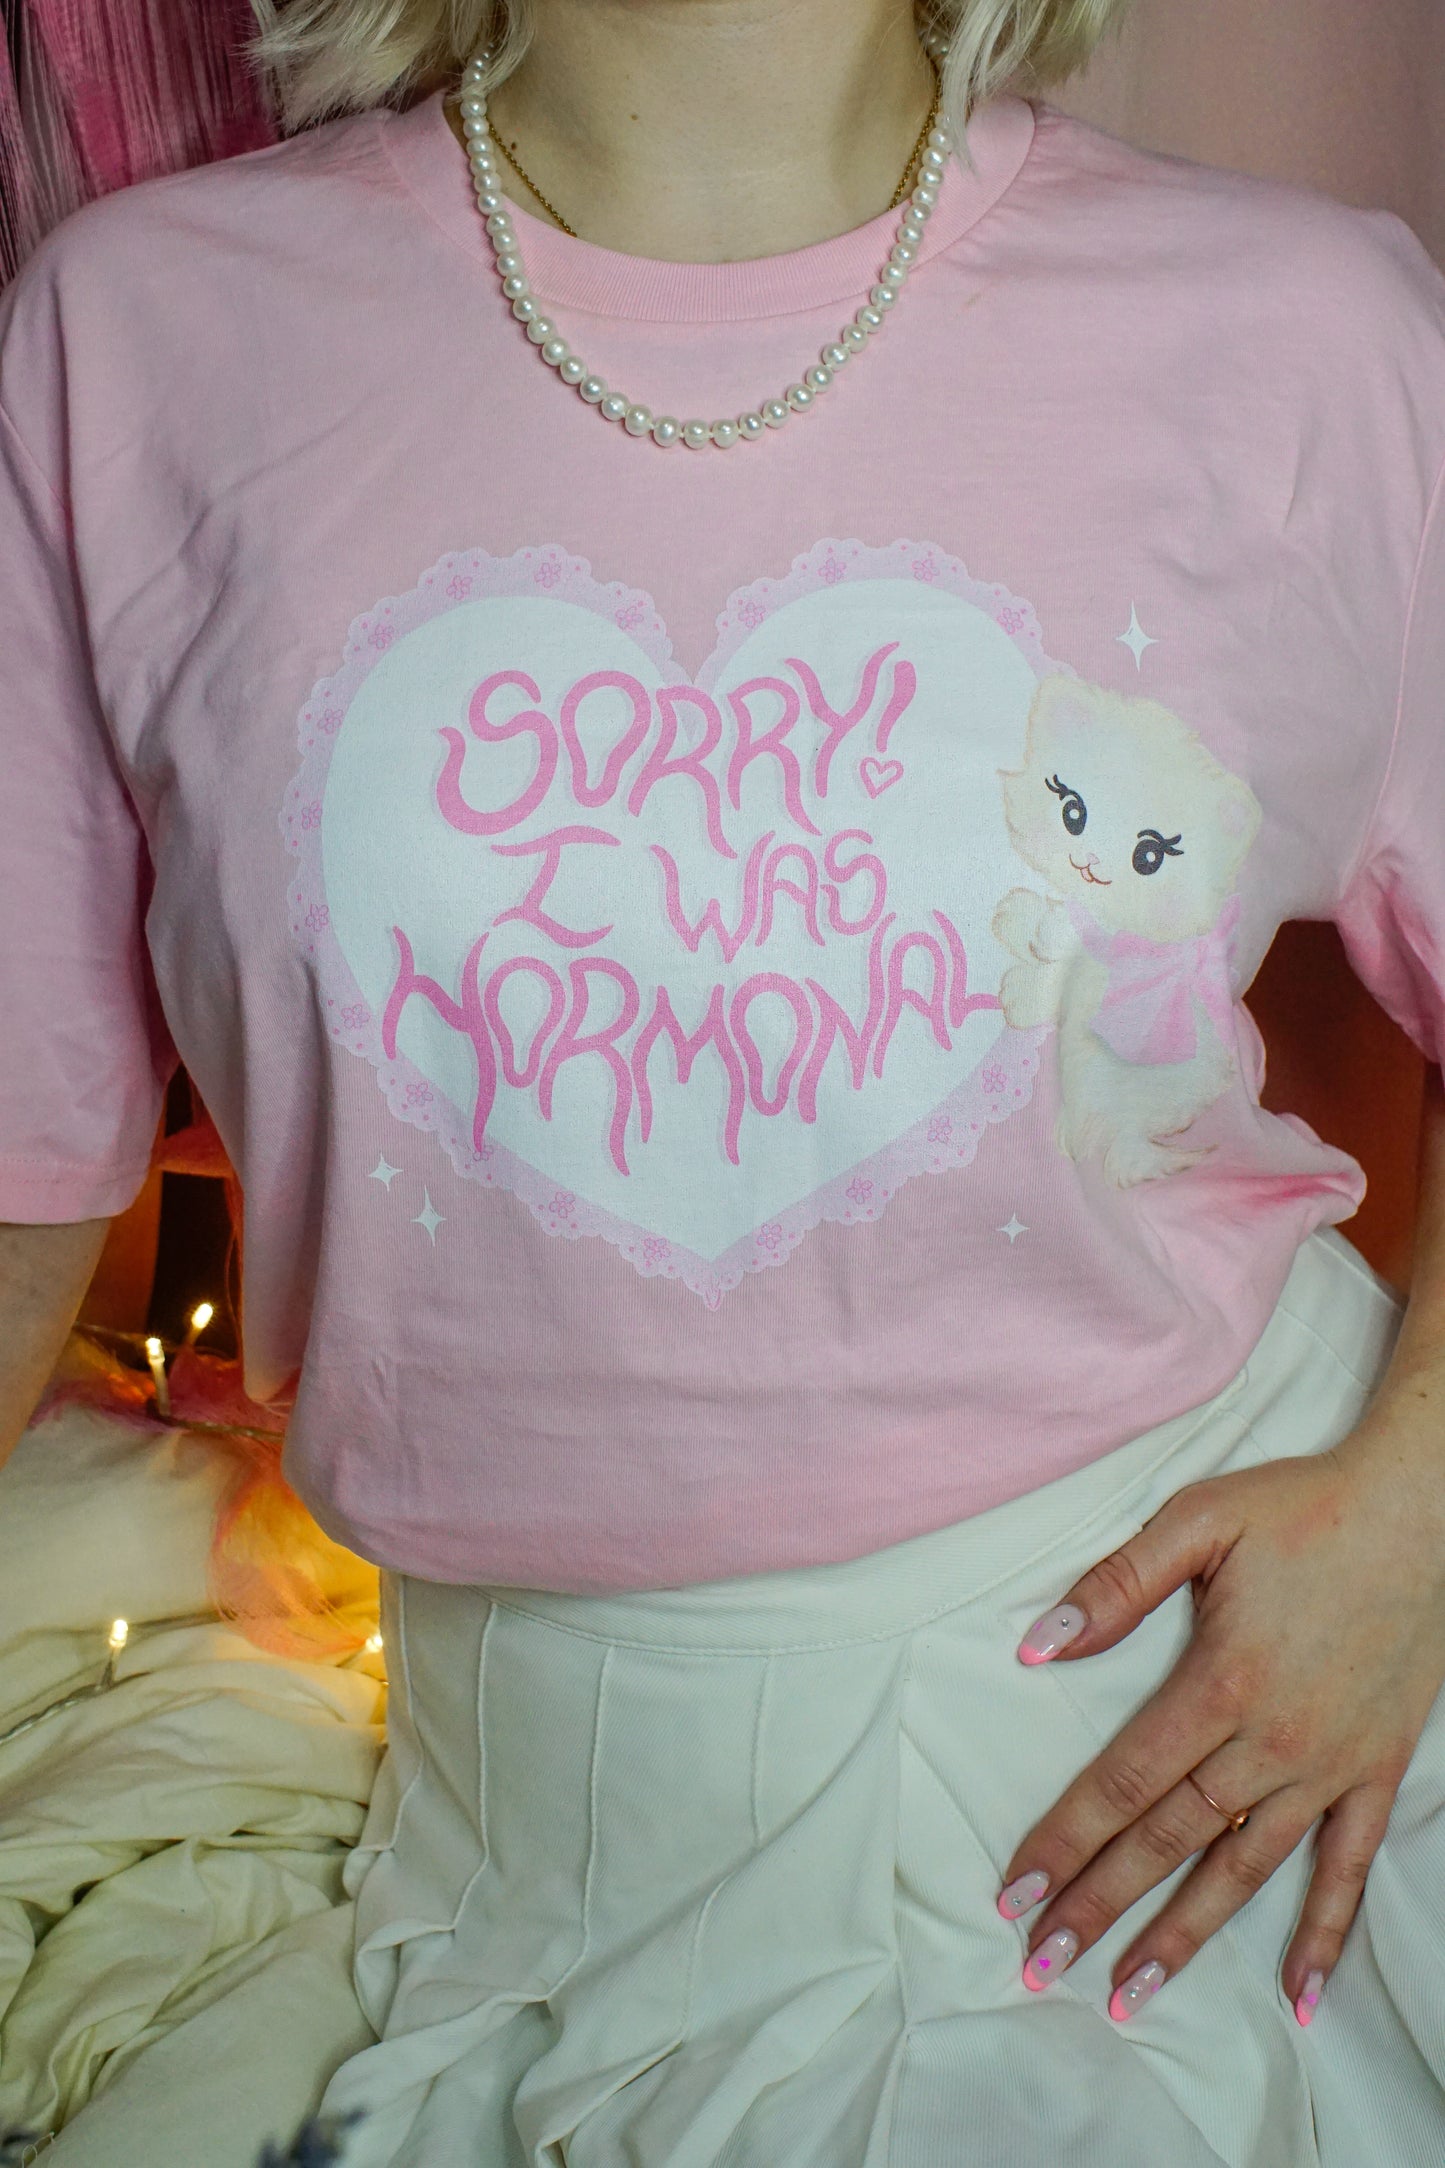 Sorry! I was hormonal t-shirt